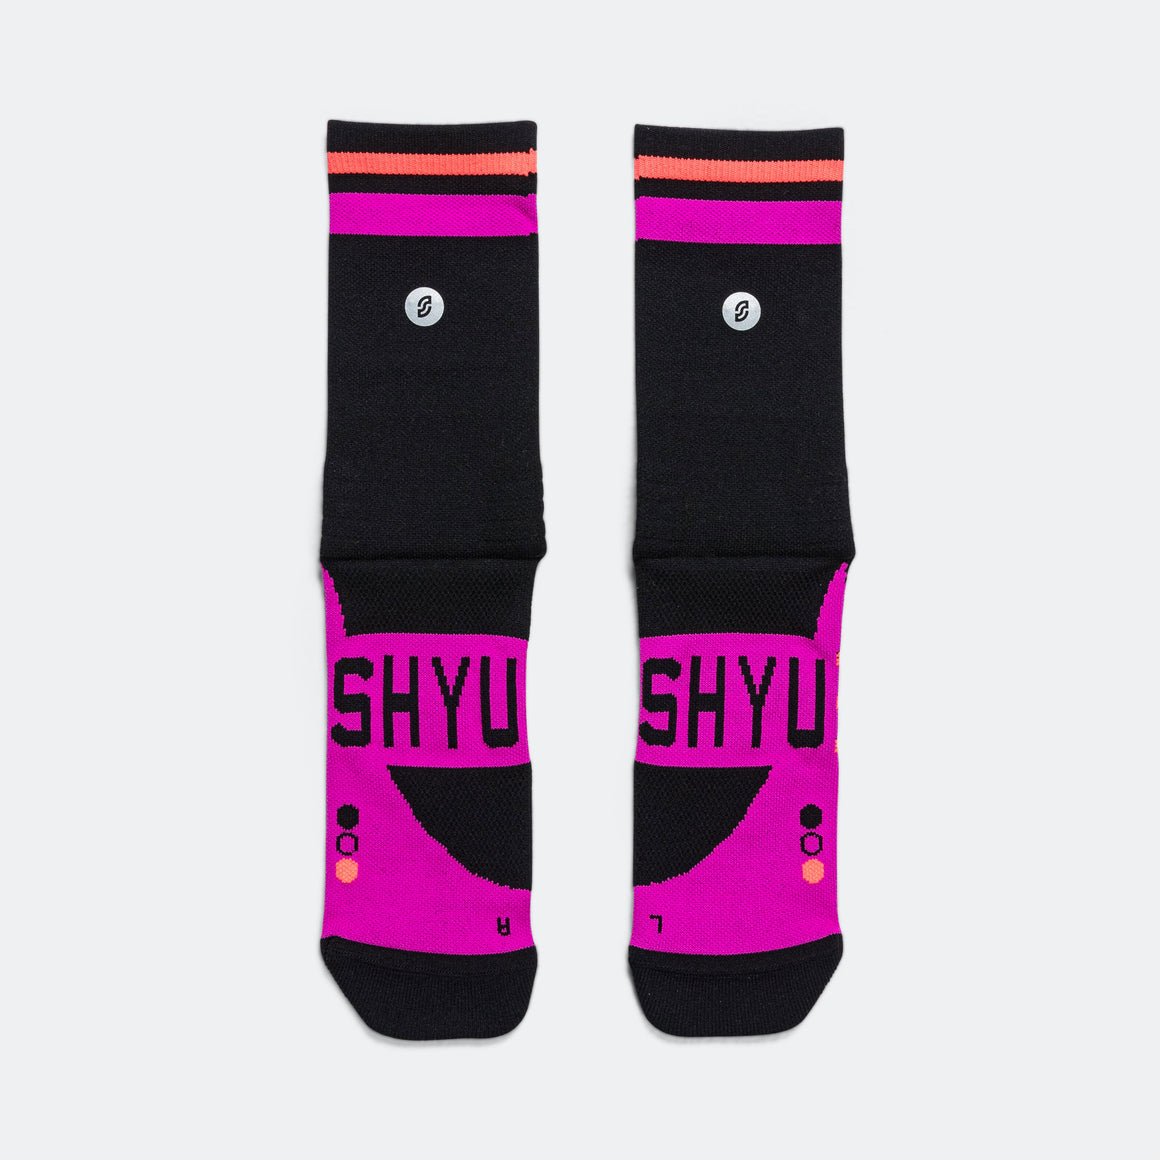 Shyu - Half Crew Racing Socks - Black/Violet/Crimson - Up There Athletics